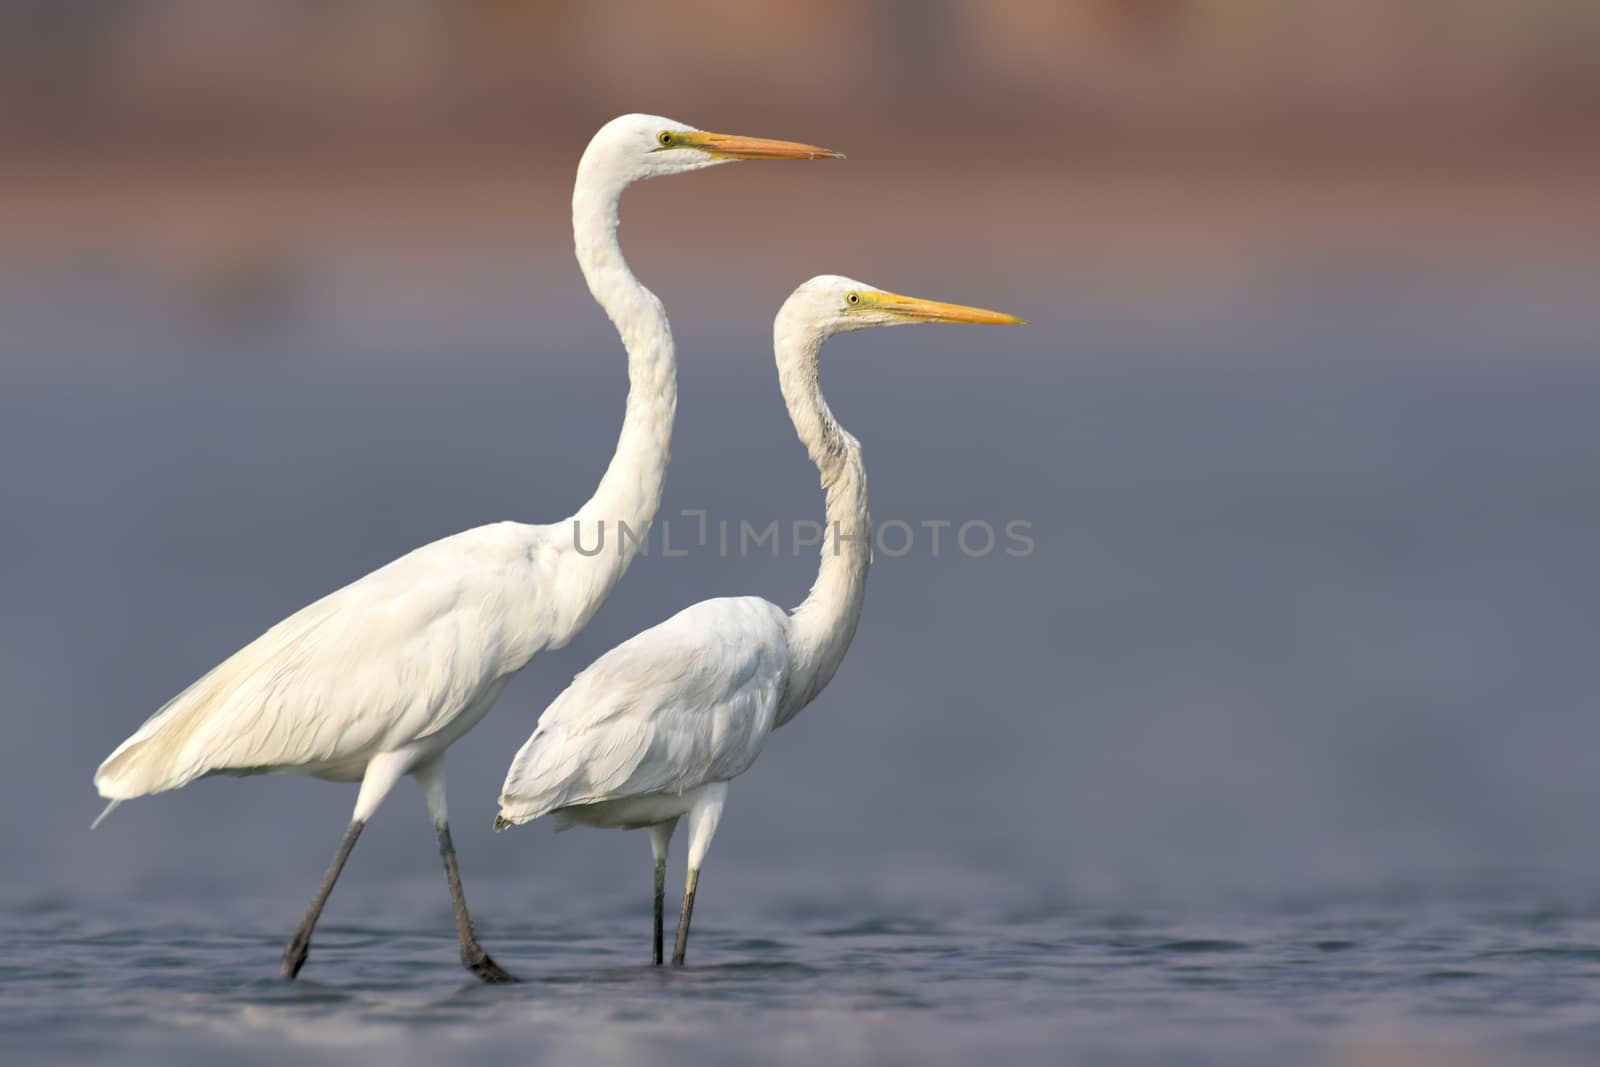 Great egret bird standing pair by rkbalaji